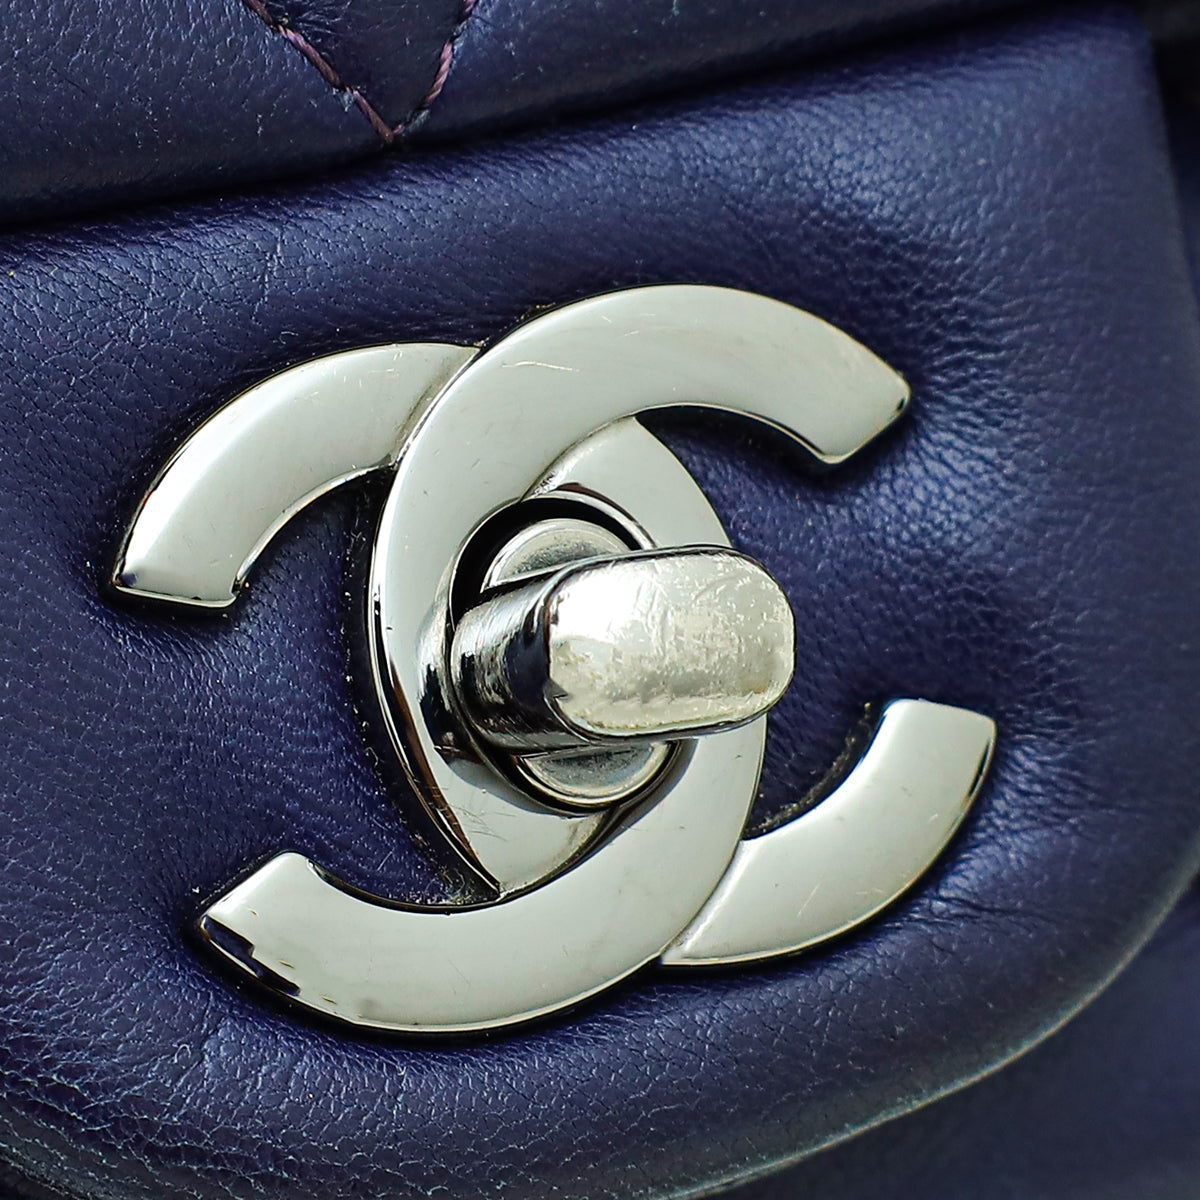 Chanel Dark Violet CC Classic Mini Square Flap Bag